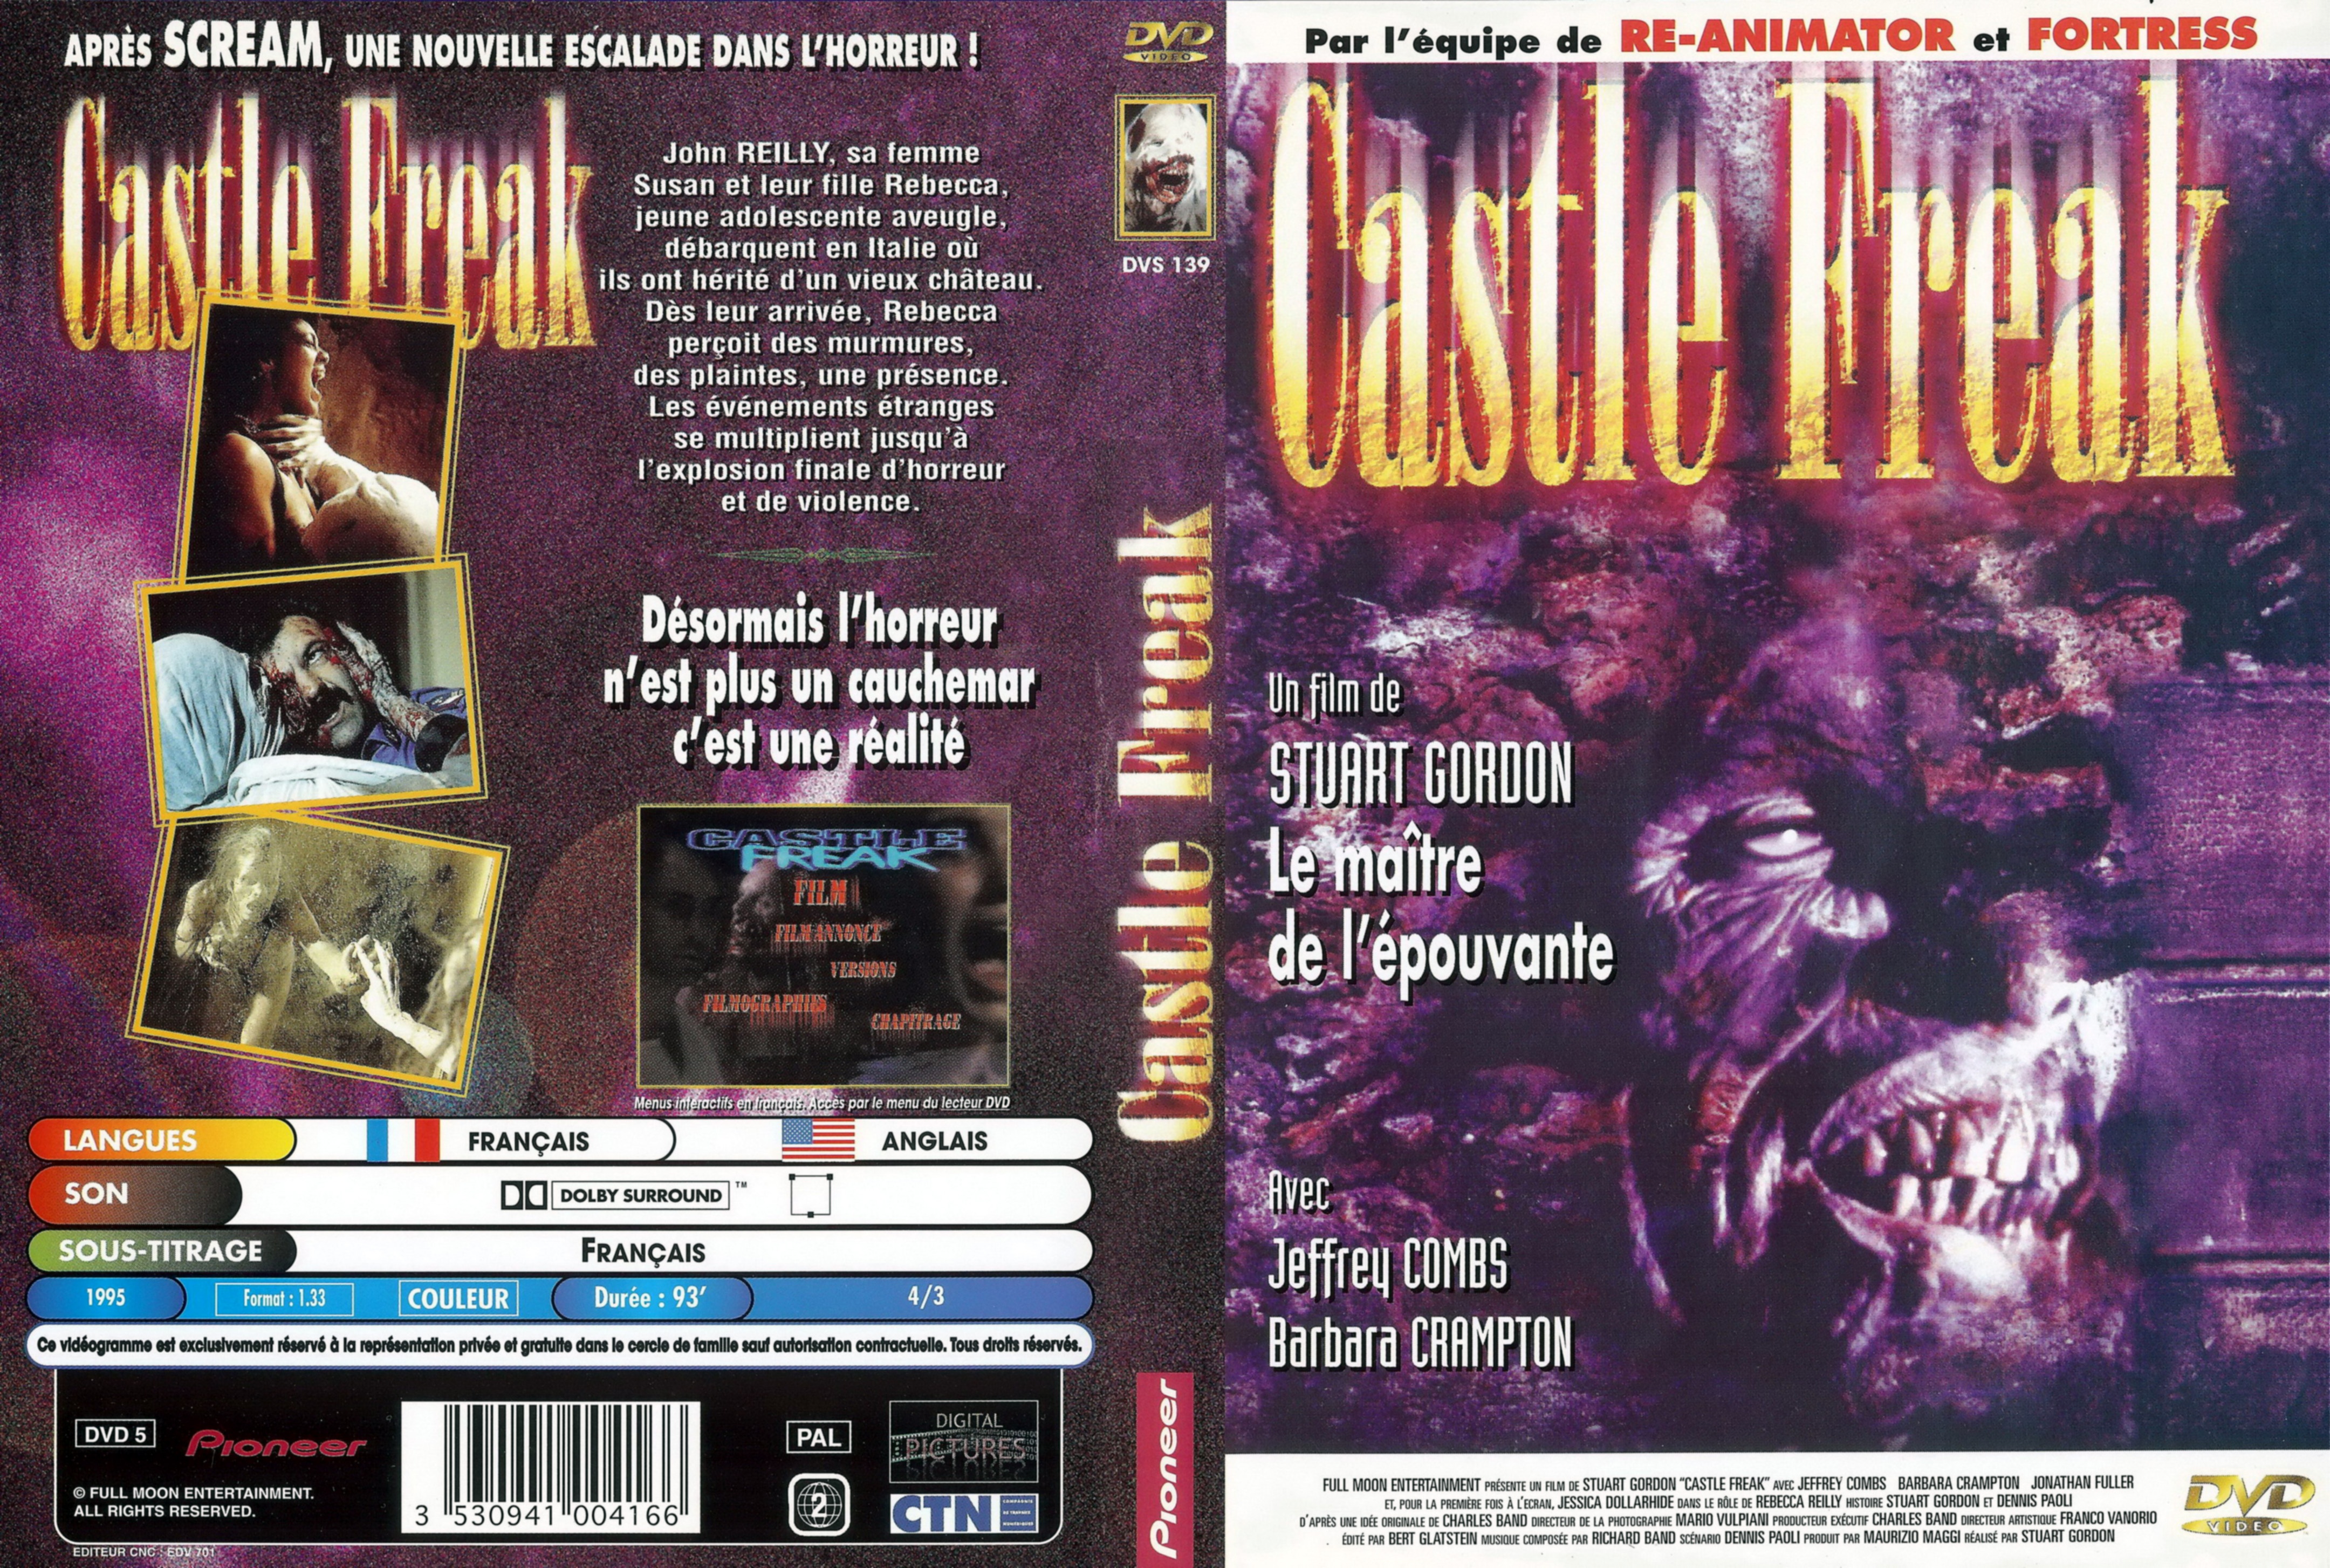 Jaquette DVD Castle Freak v2